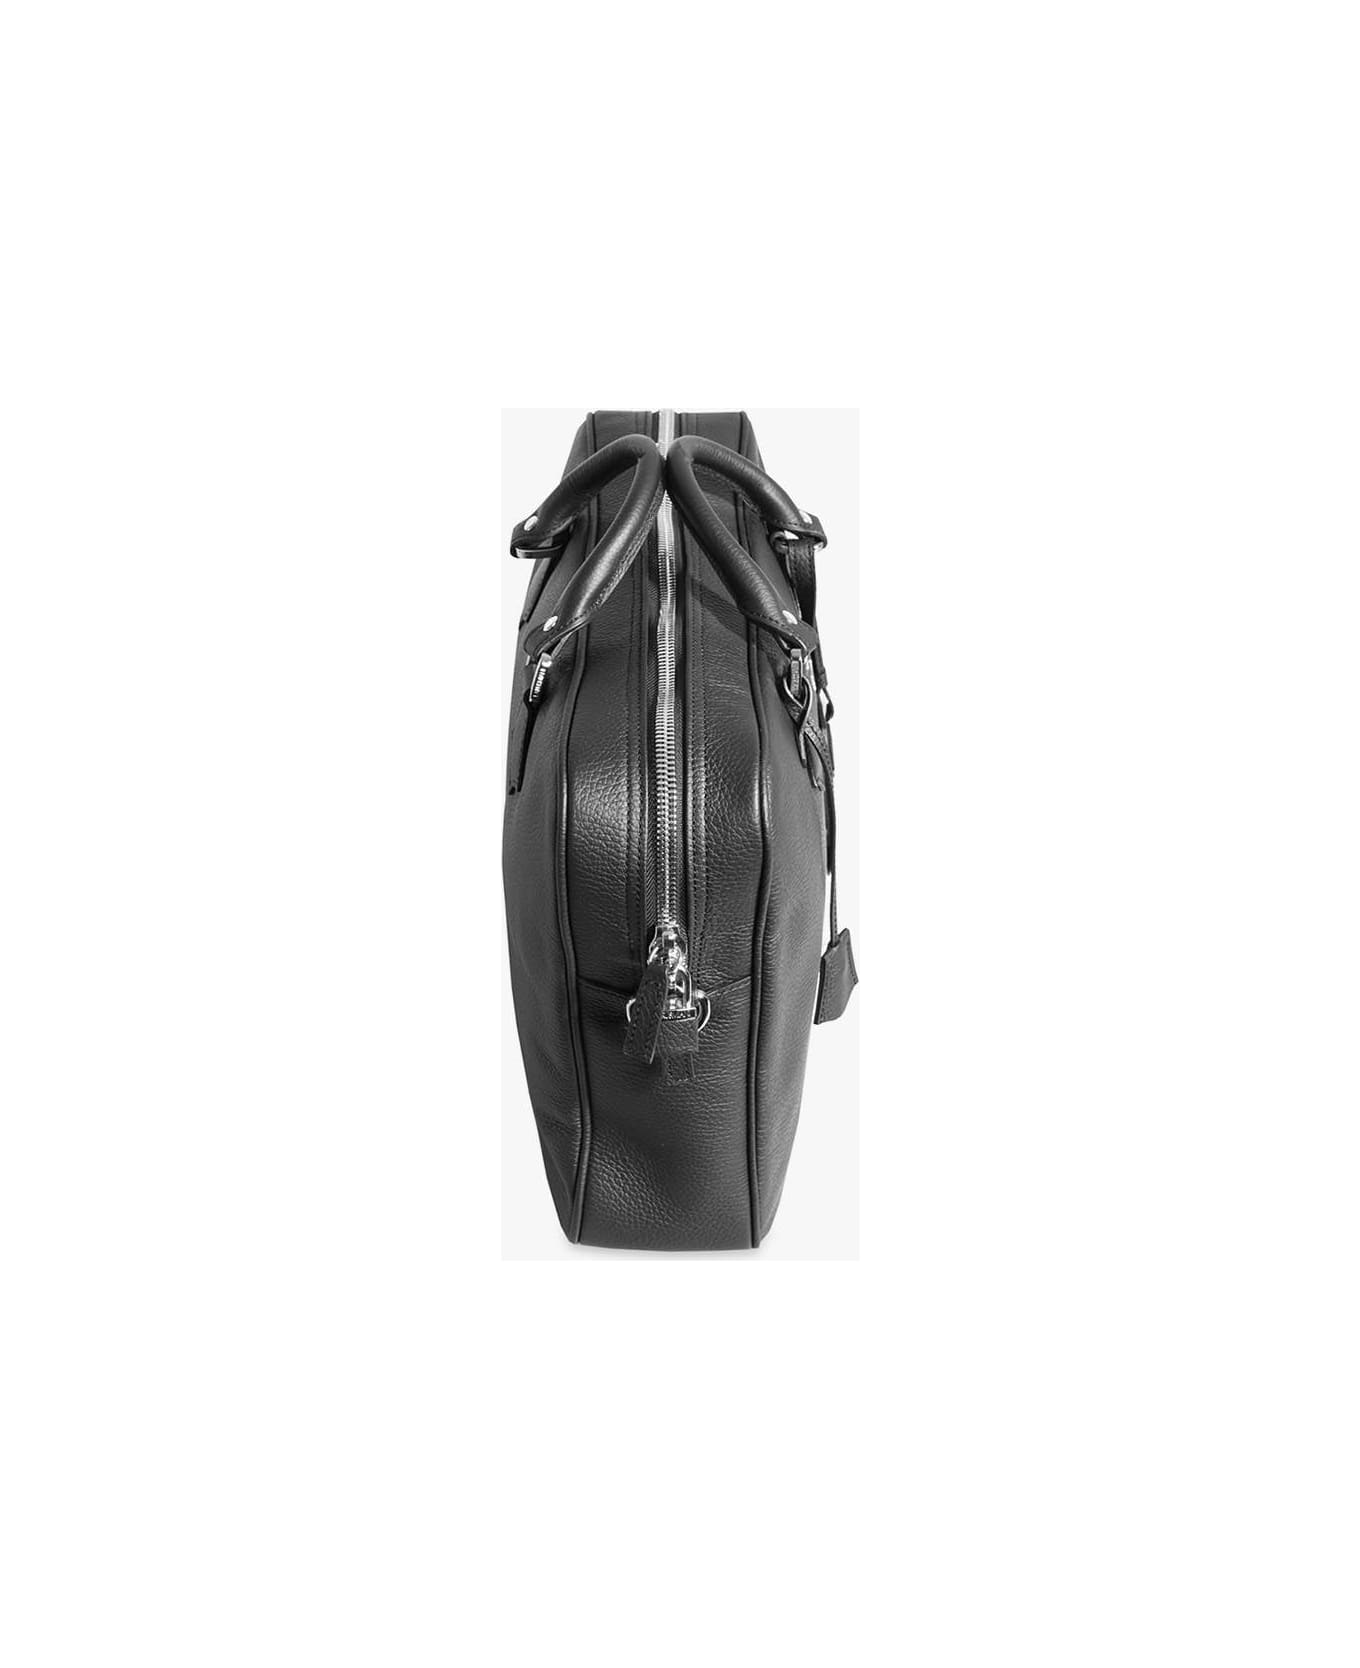 Larusmiani Briefcase 'piazza Affari' Luggage - Black